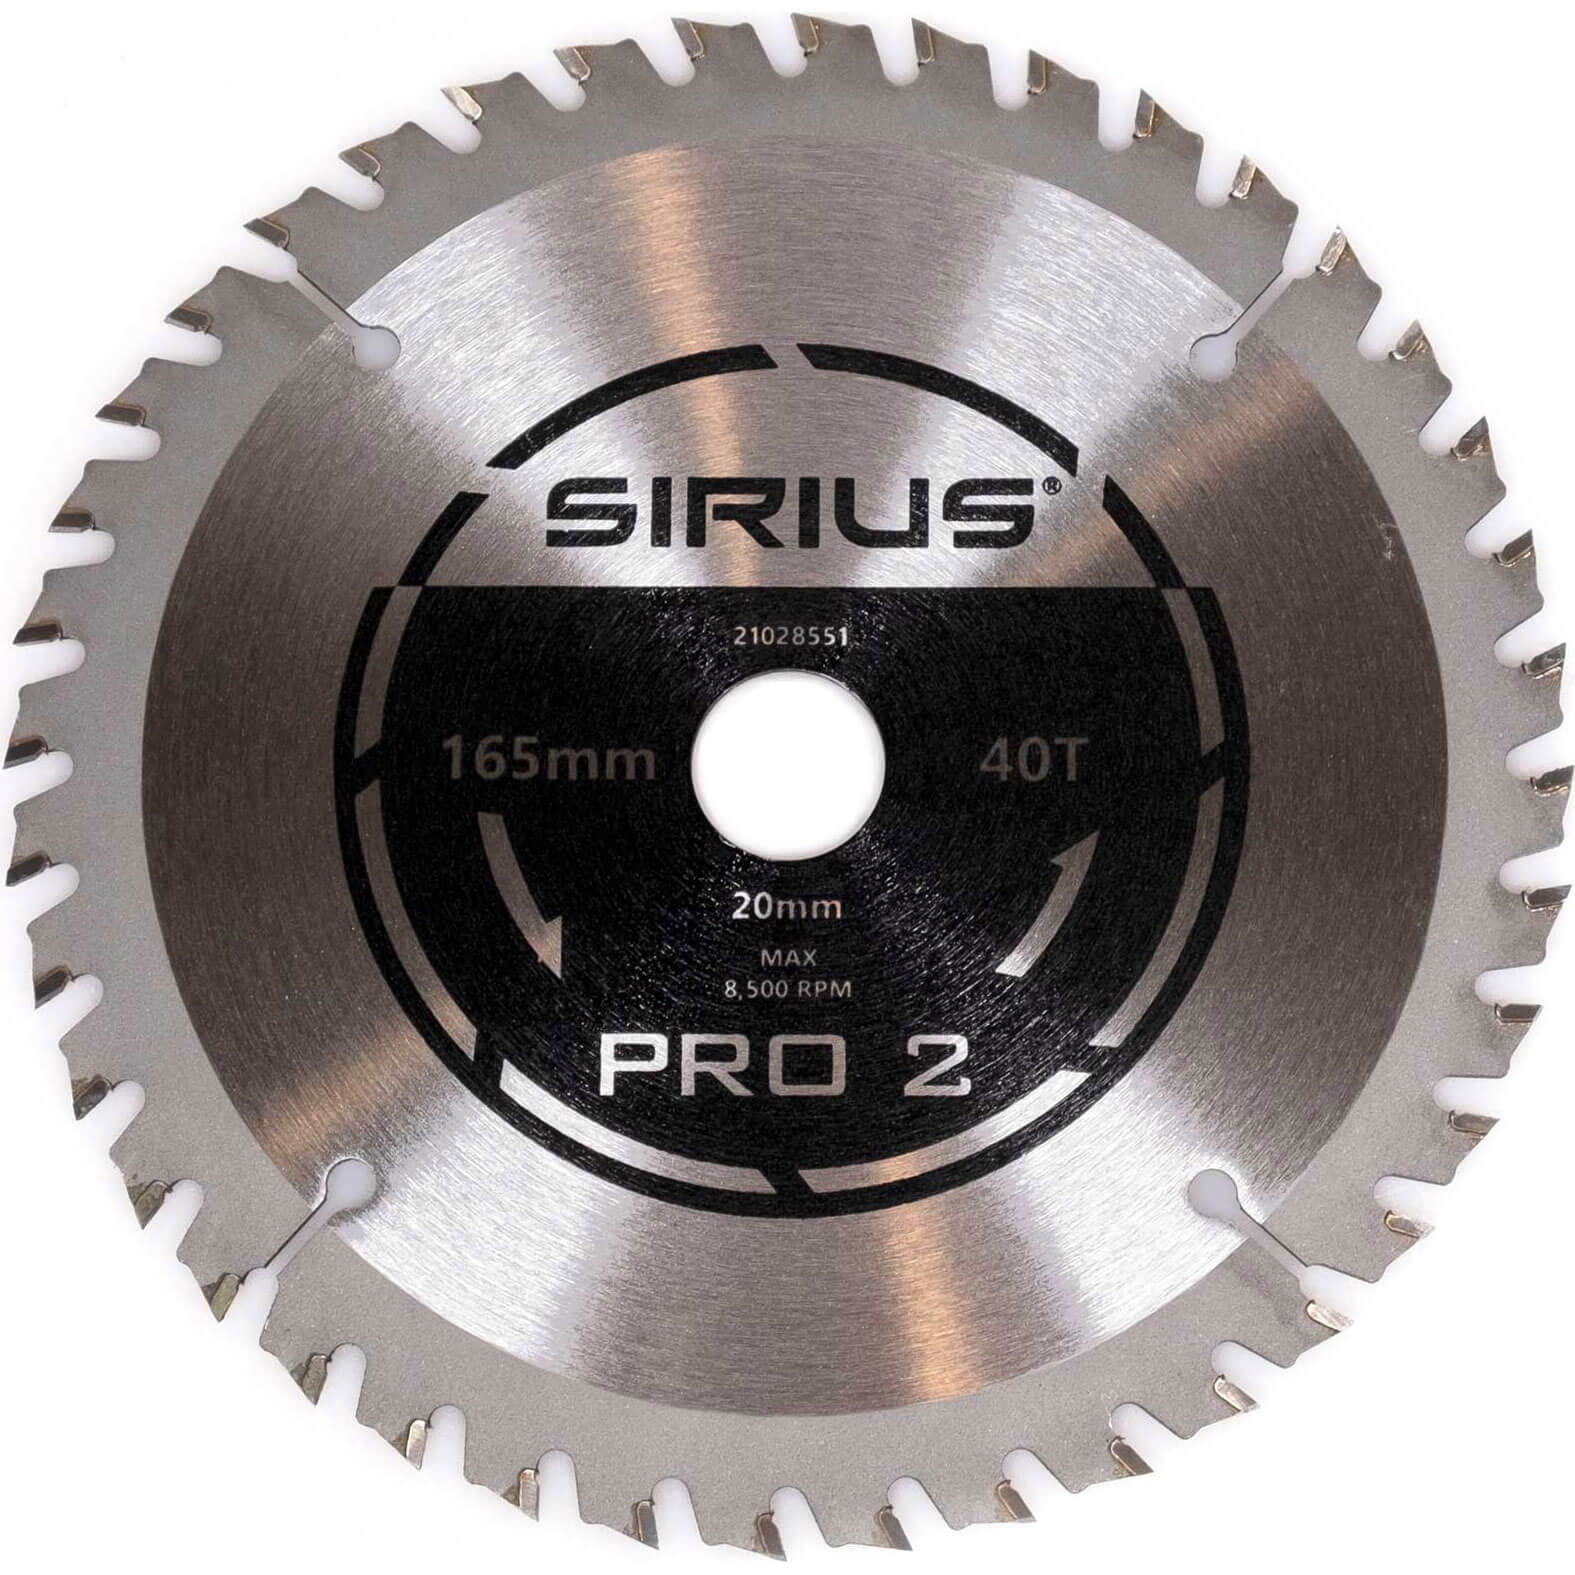 Photo of Sirius Pro 2 165mm Cordless Circular Saw Blade 165mm 40t 20mm